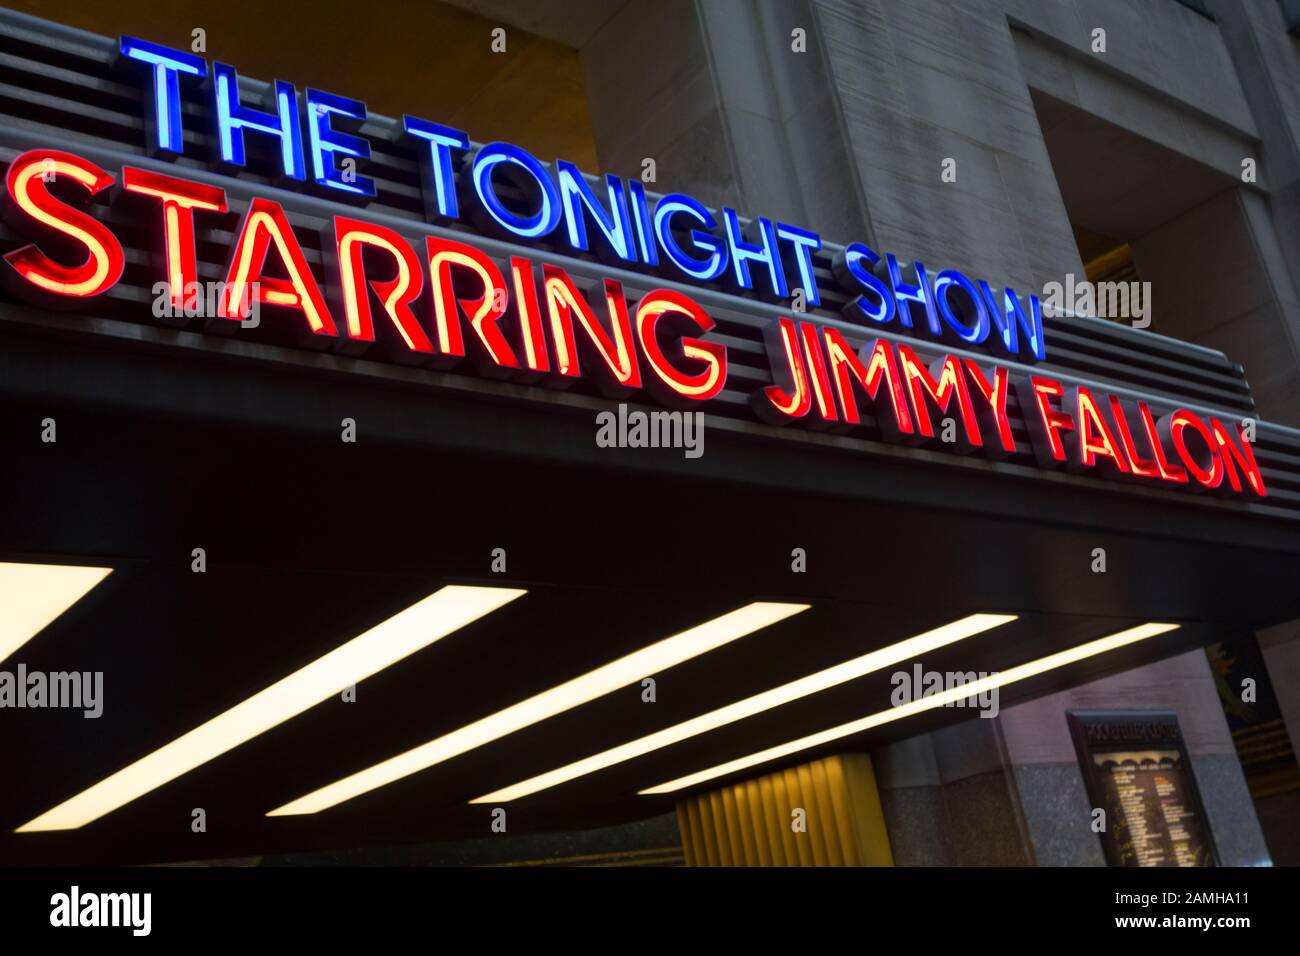 Sign for NBC Studios, The Tonight Show starring Jimmy Fallon at the entrance to NBC Studios, Sixth Avenue, New York City, NY, USA Stock Photo